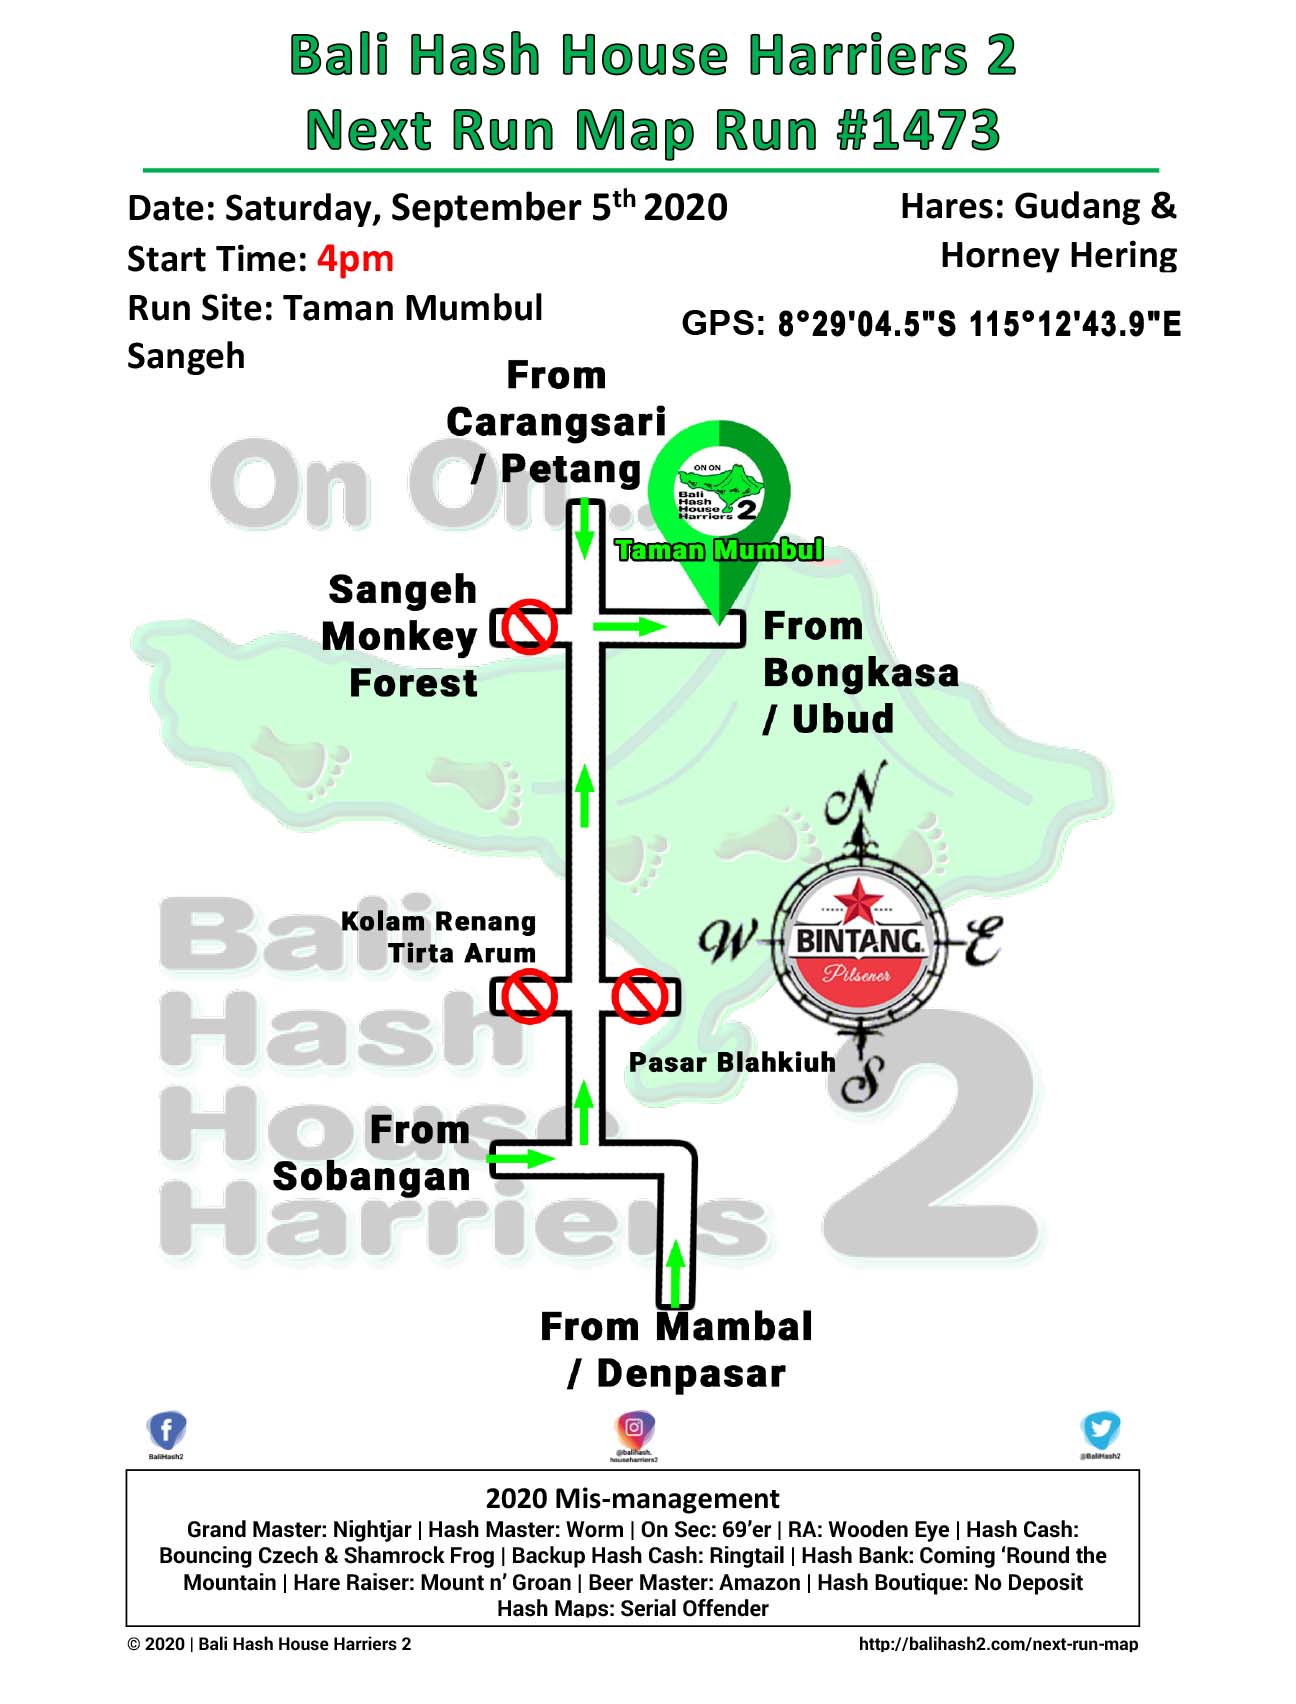 Bali Hash House Harriers 2 Next Run Map Date: Saturday 5-Sep-2019 Run Start: 4:00PM Location: Taman Mumbul Sangeh Hares: Gudang & Horney Hering